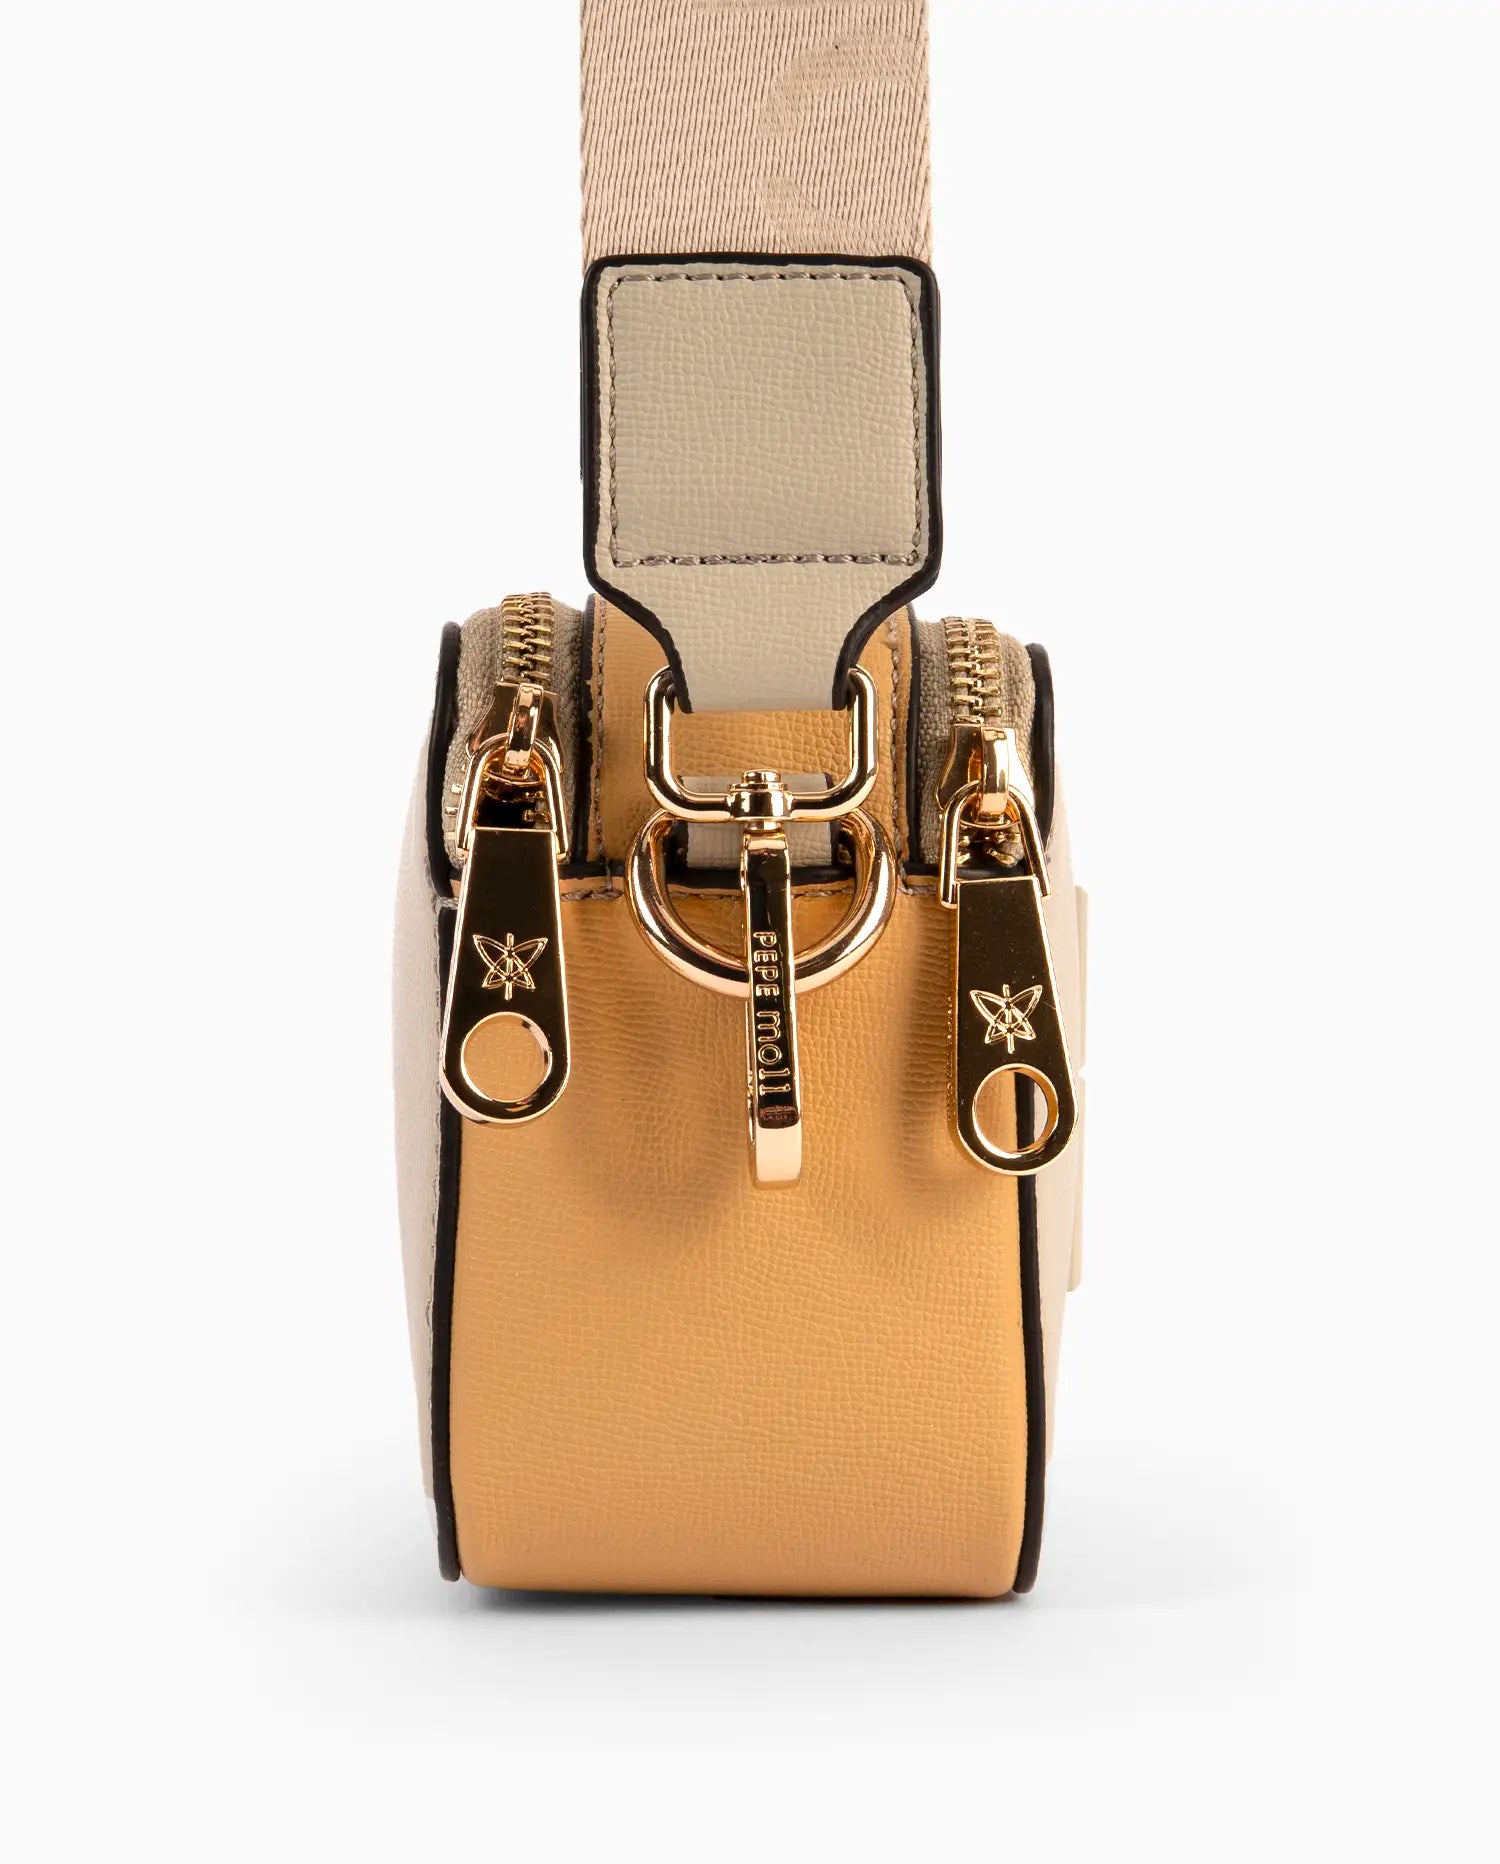  Side view of Pepe Moll Frenzy Stone-Bi Crossbody Bag 241360, emphasizing its sleek and stylish design.